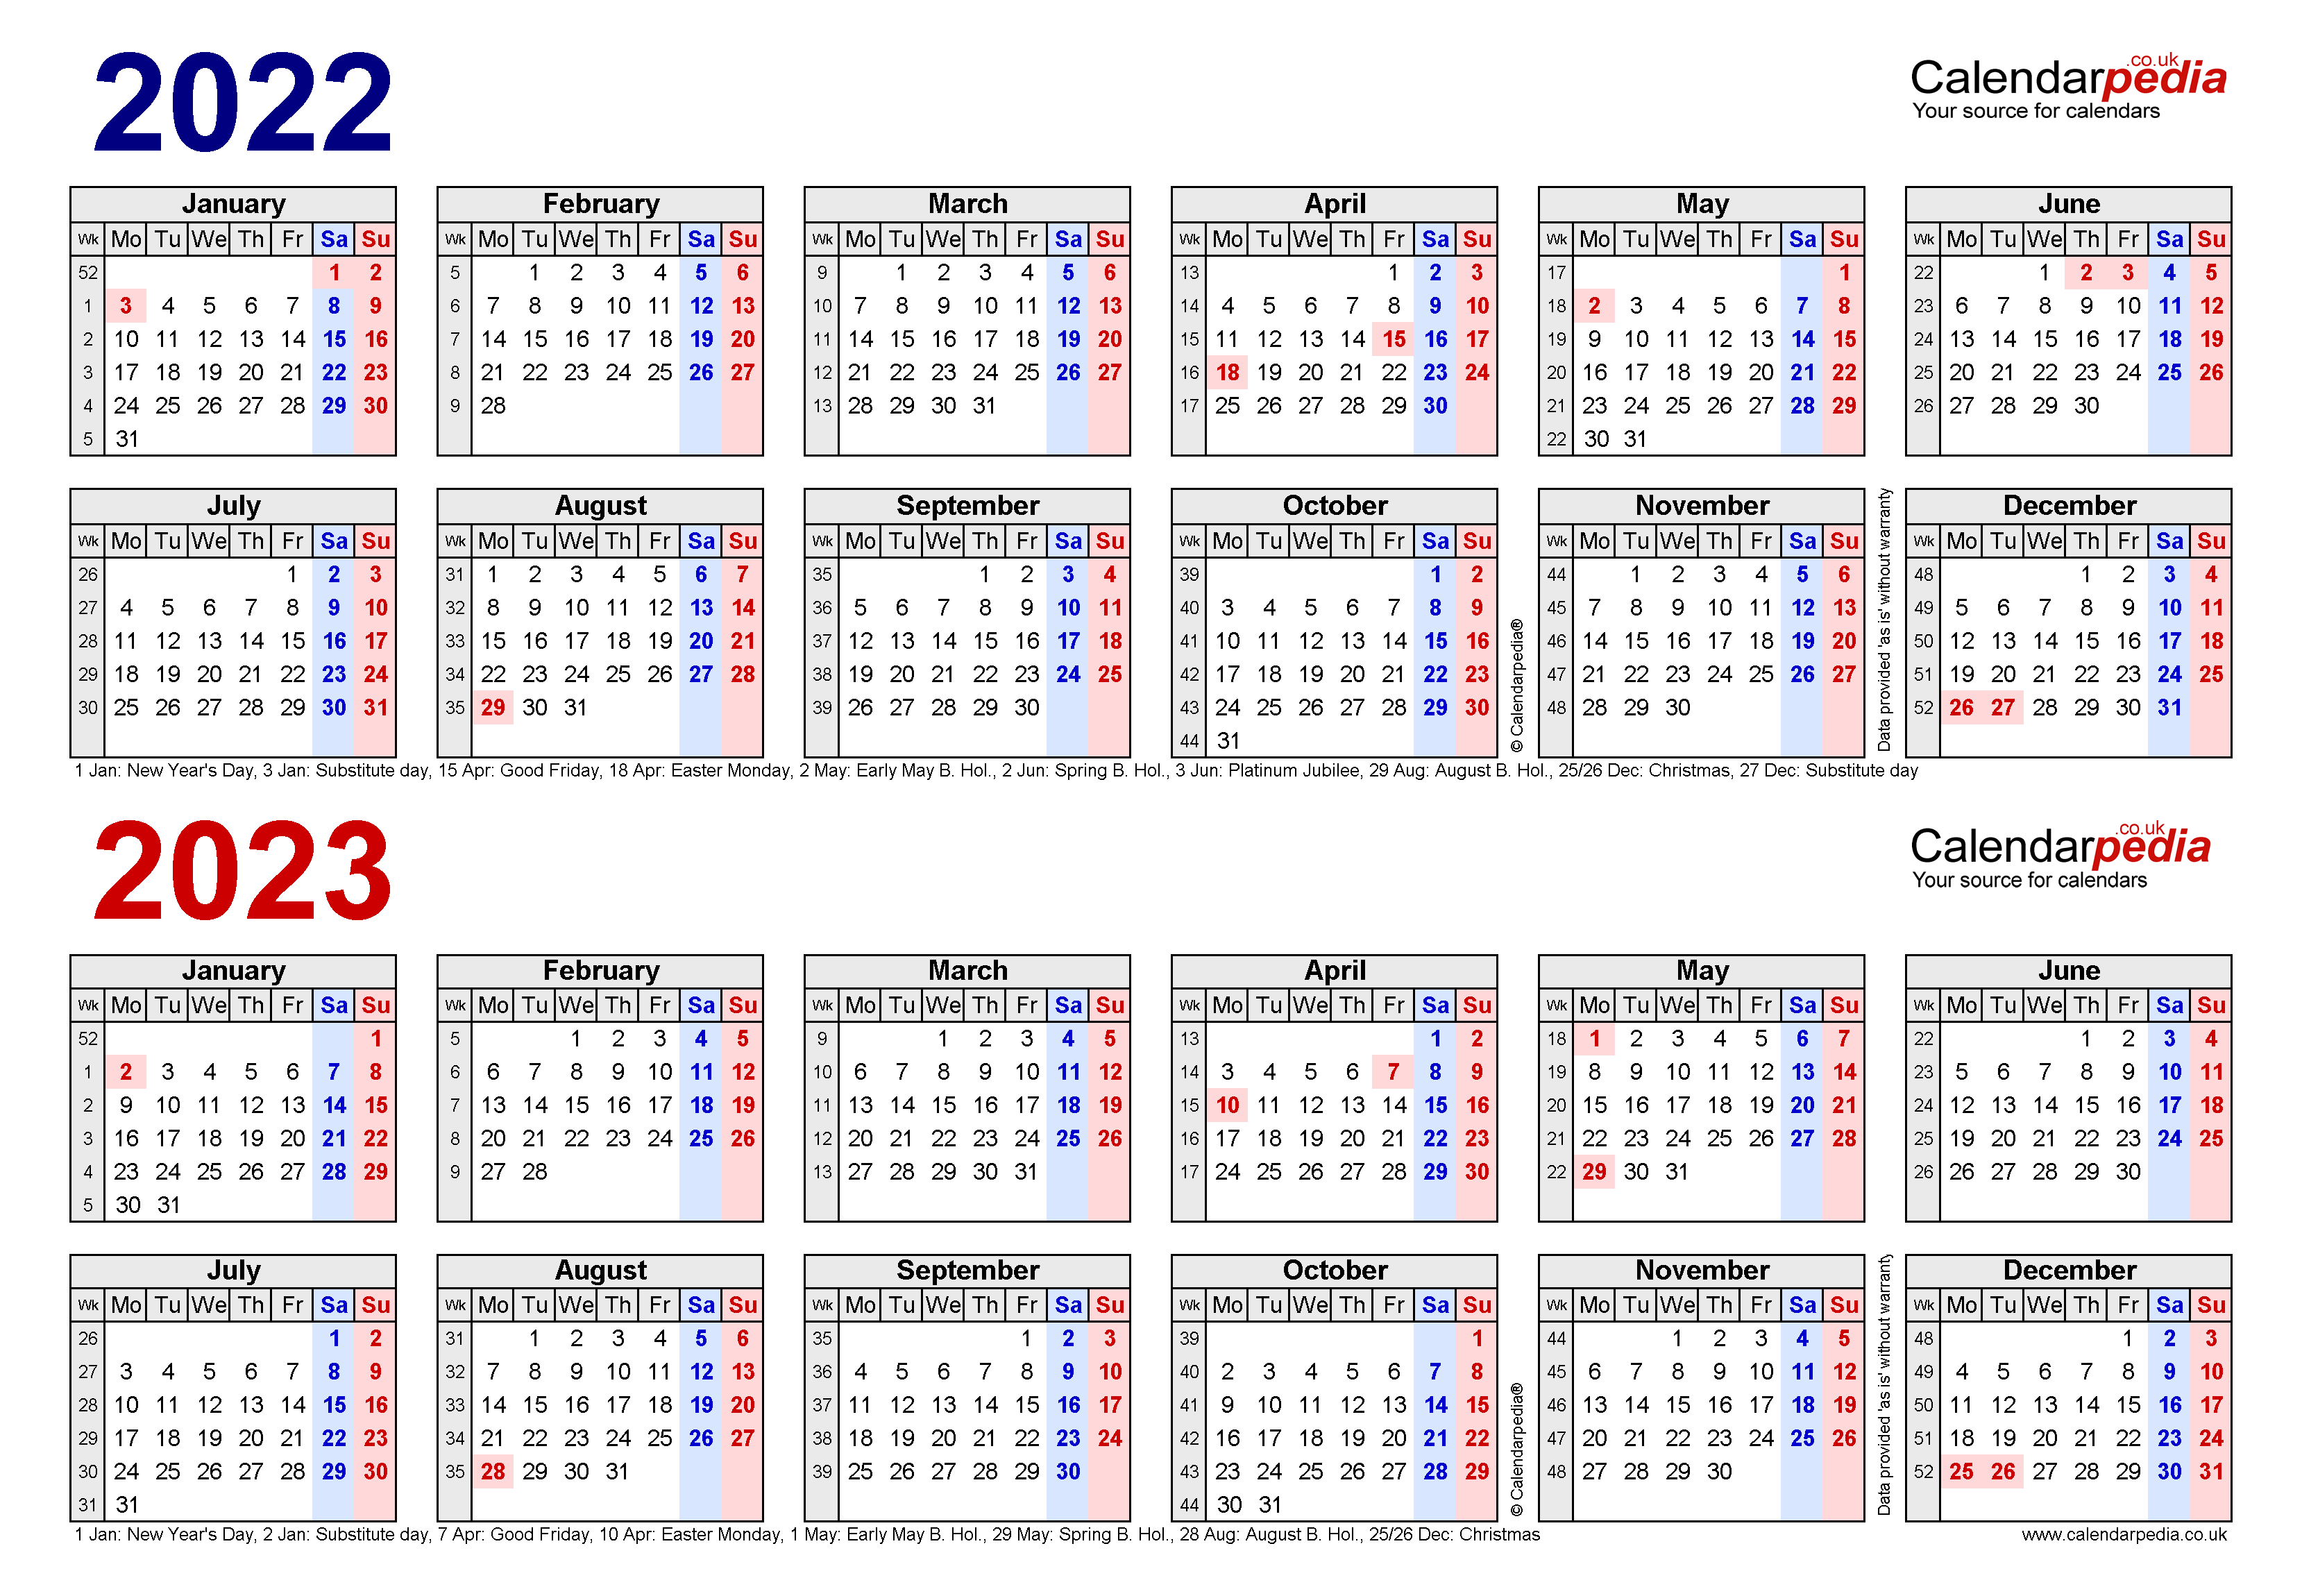 Warrick County School Corporation Calendar 2023 2024 From County ...